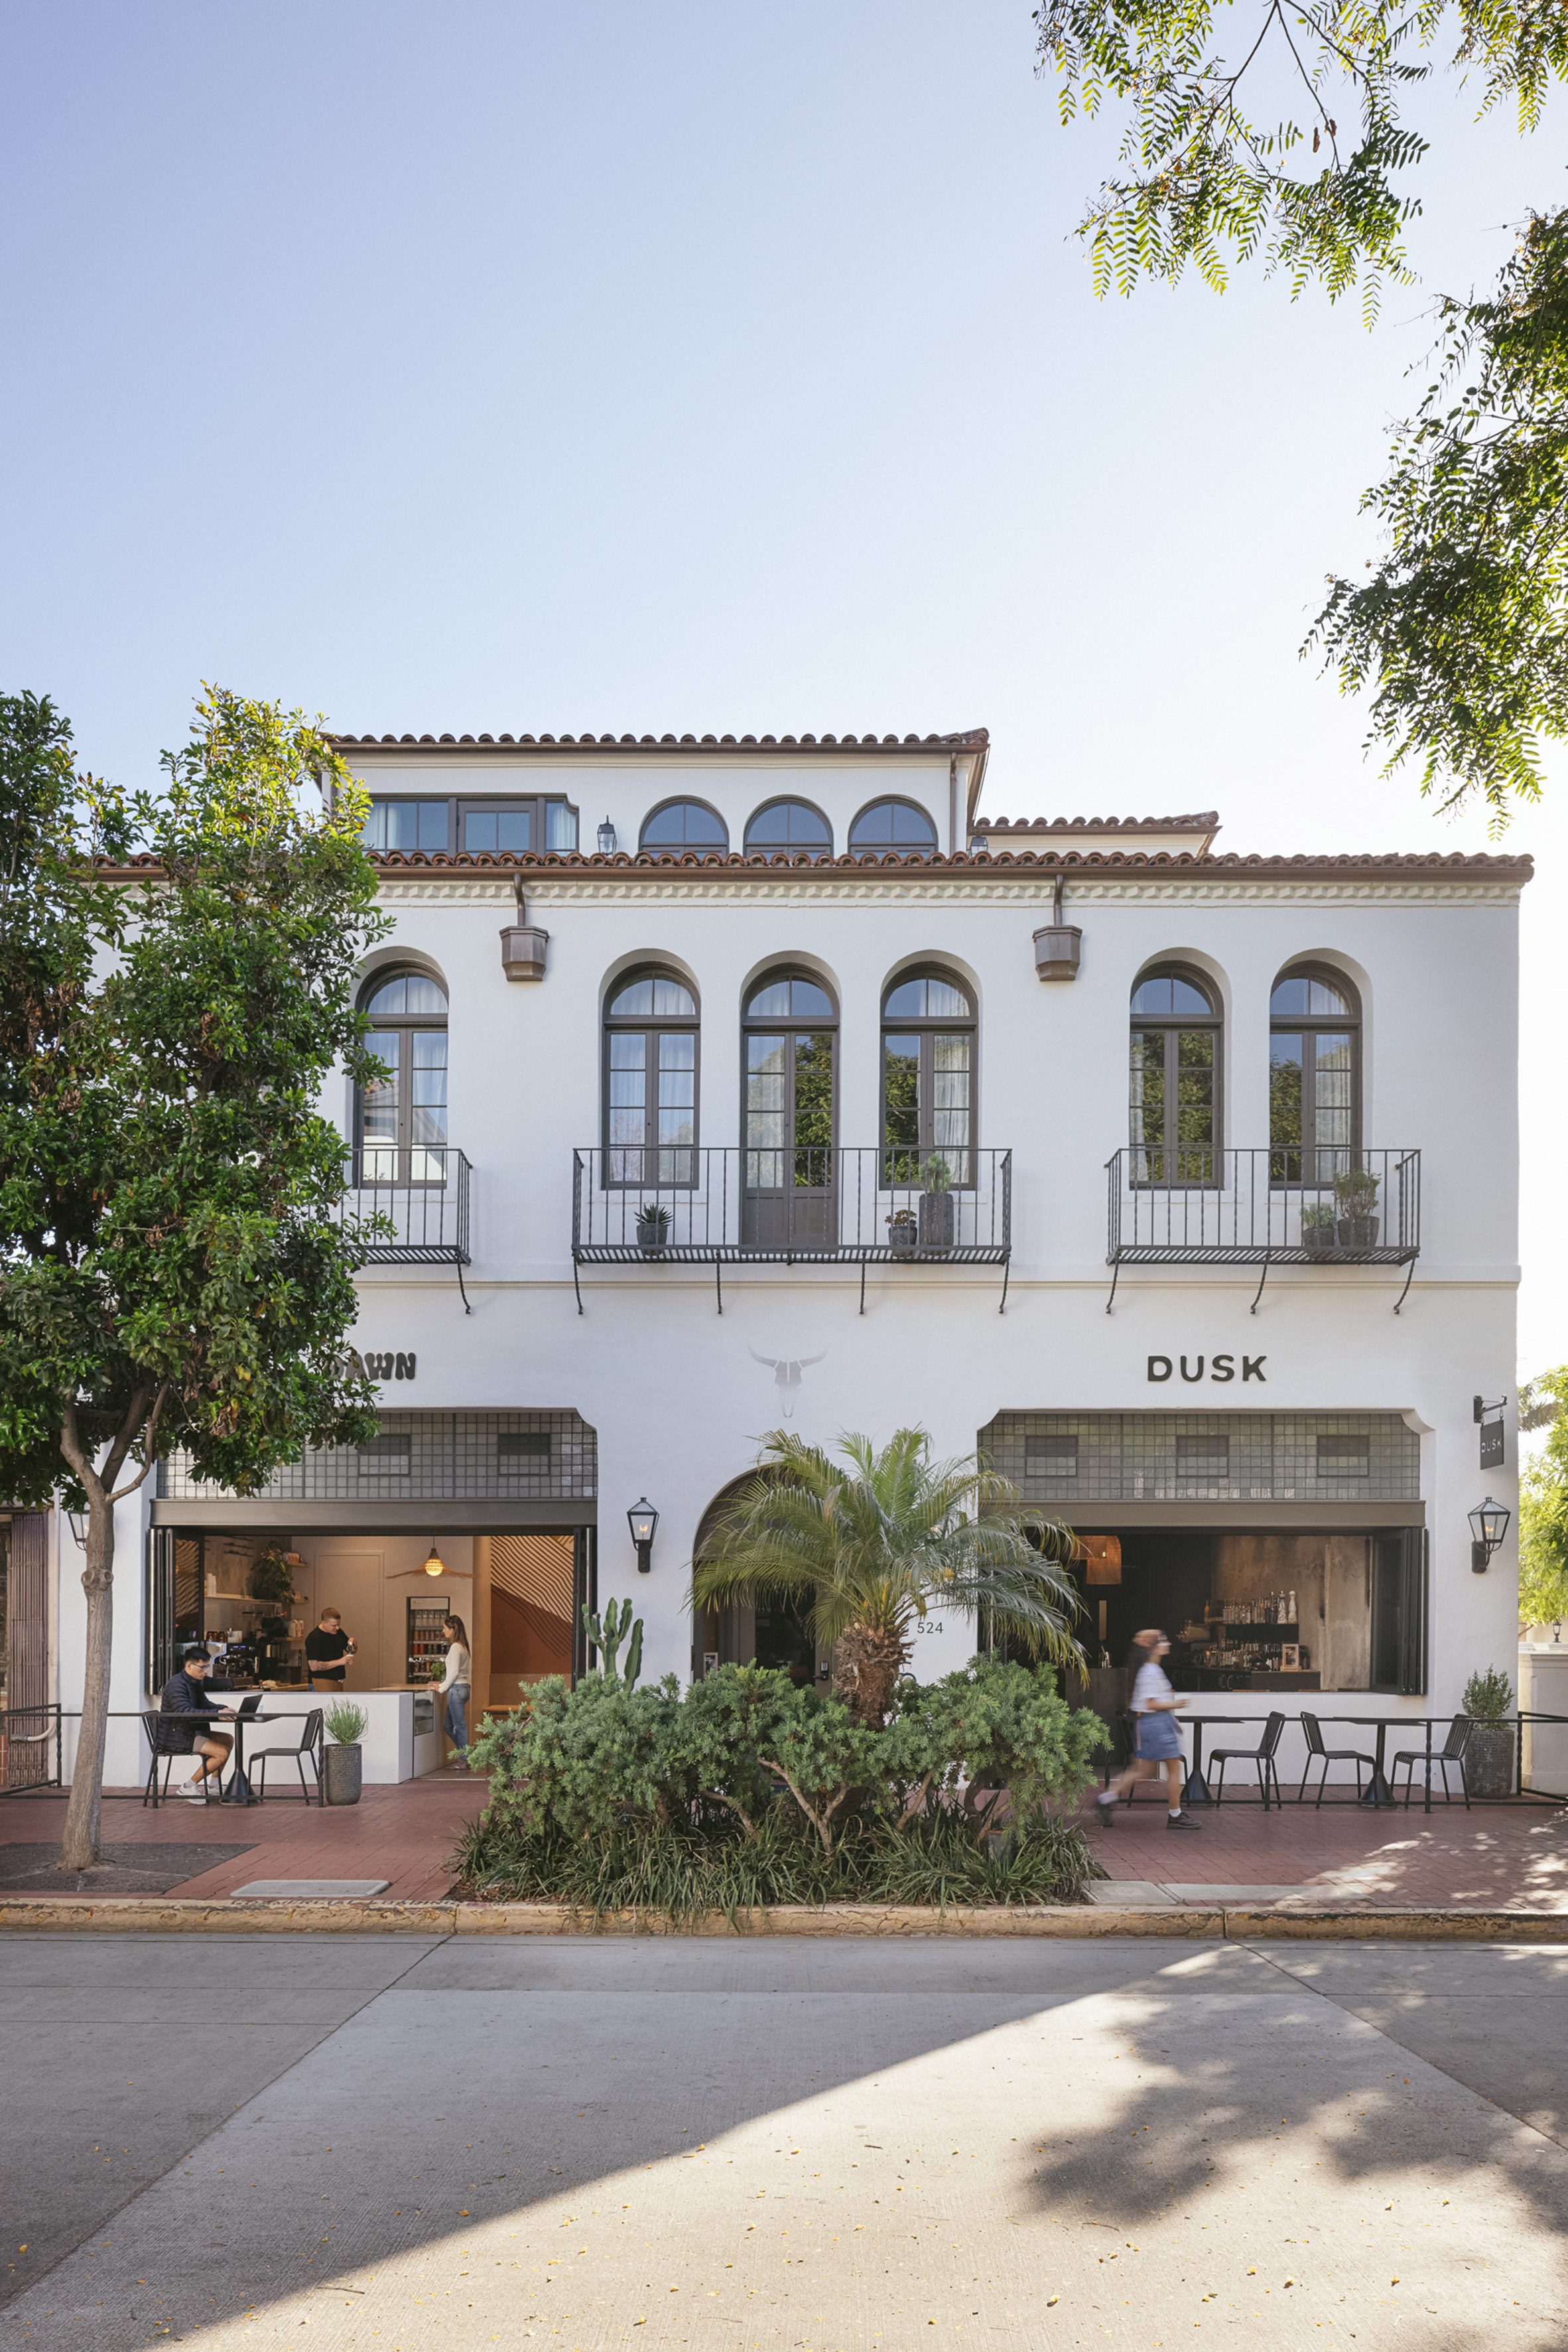 Anacapa Architecture将历史建筑改造成Drift Santa Barbara酒店|ART-Arrakis | 建筑室内设计的创新与灵感